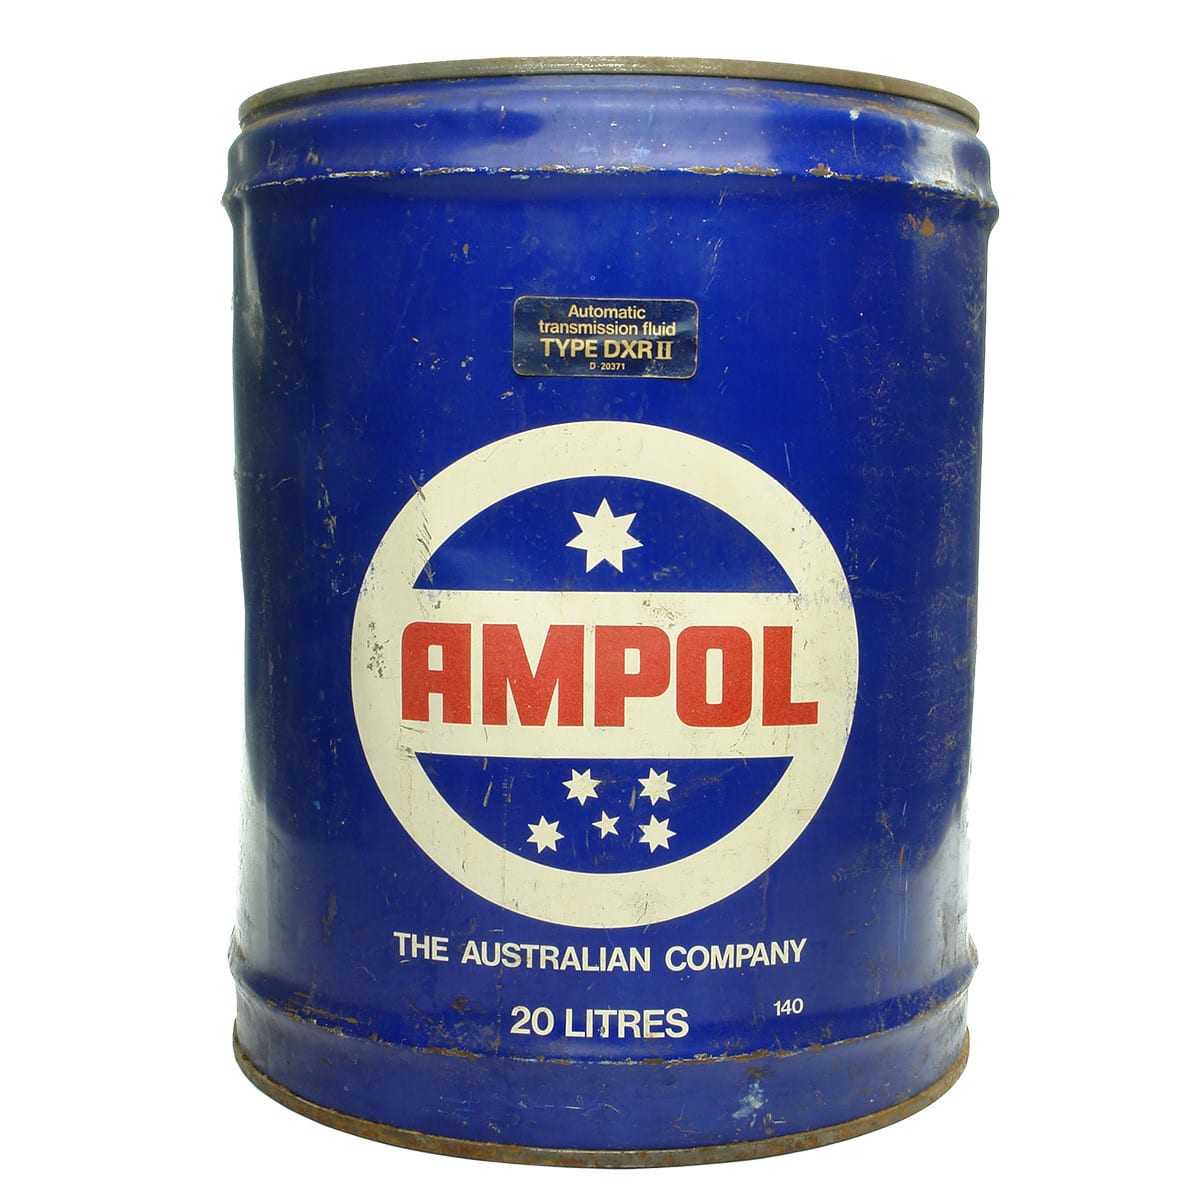 Oil Drum. Ampol the Australian Company. 20 Litres. Automatic Transmission Fluid sticker.